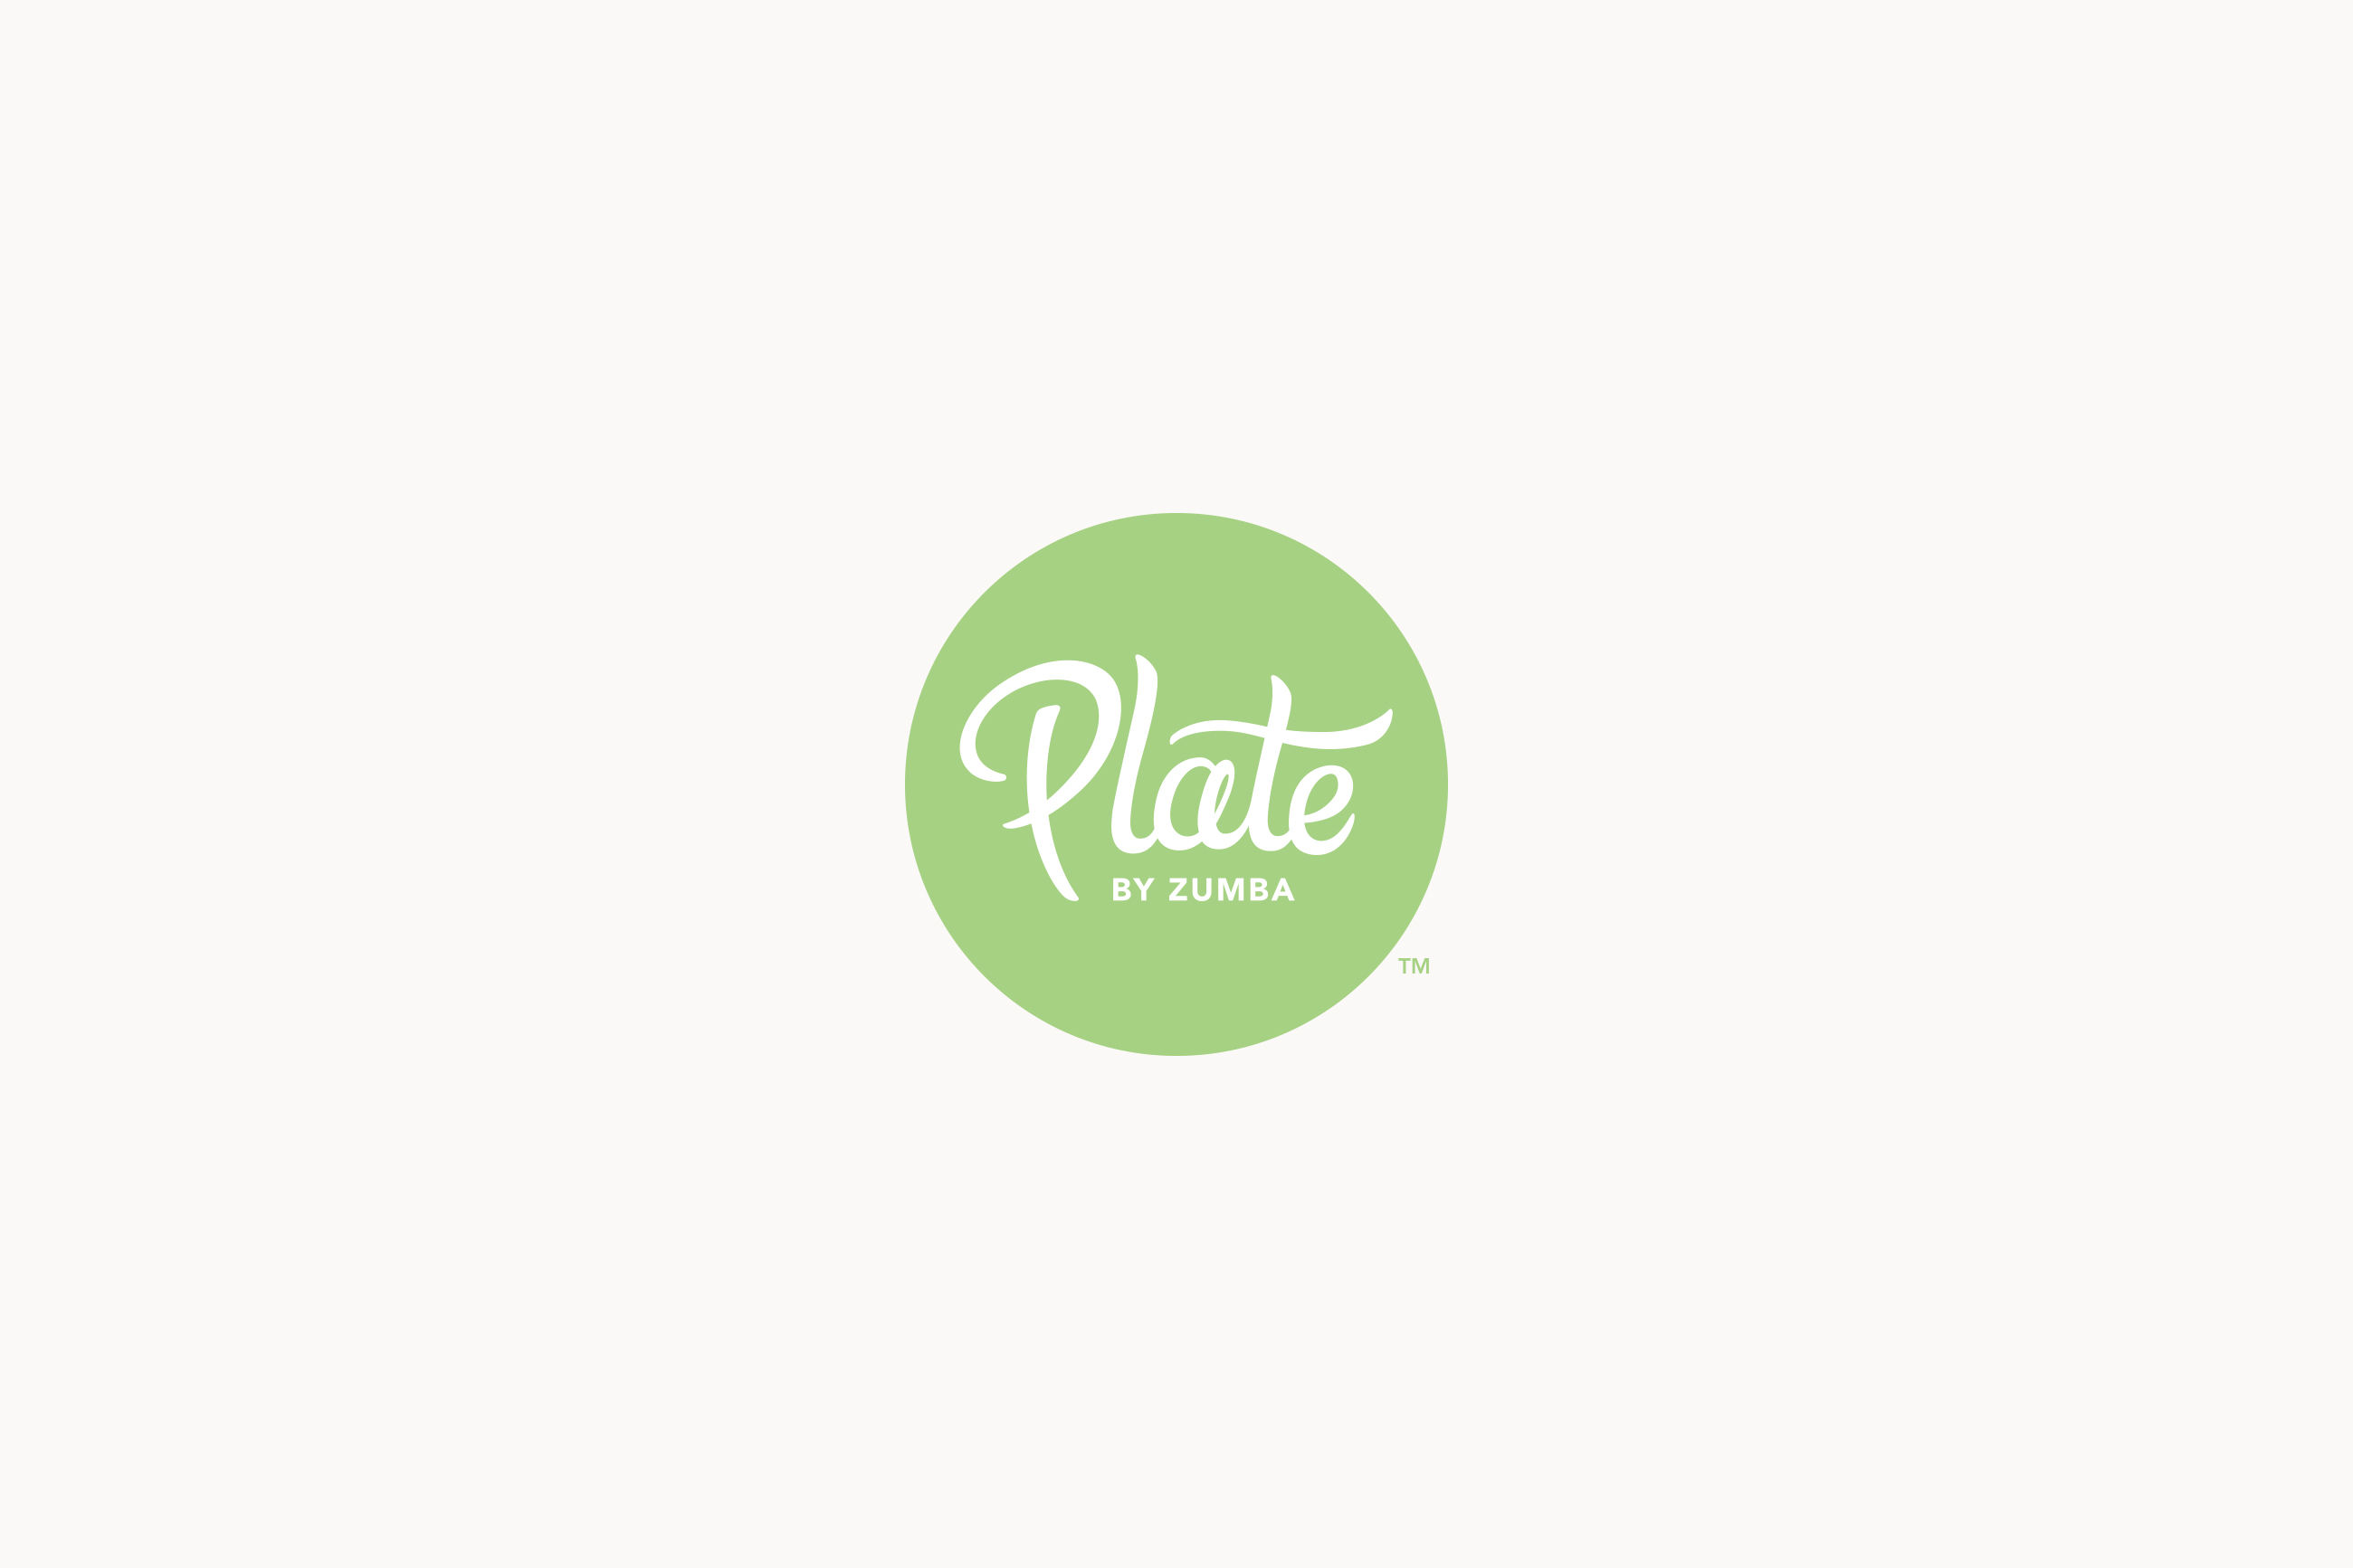 Plate_logo2_Studio_St_Louis